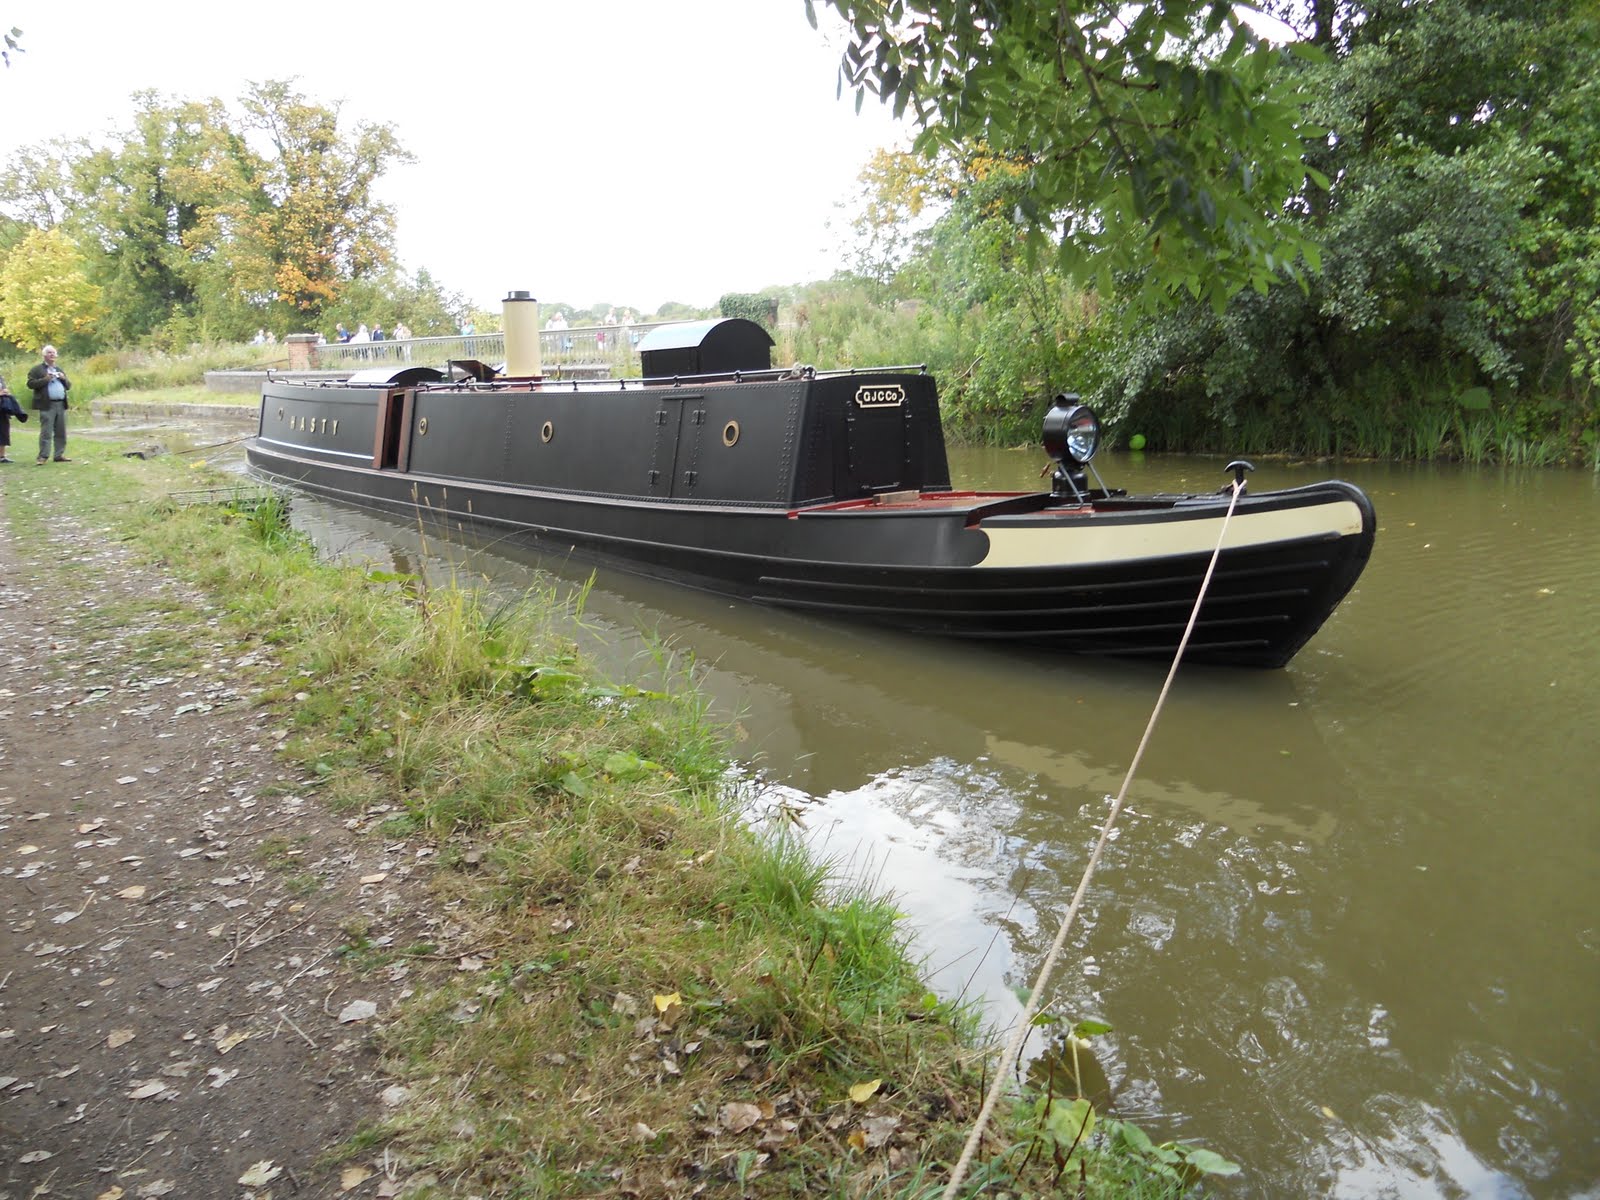 Harris &amp; Watson Narrowboat Build: Another interesting boat - Hasty